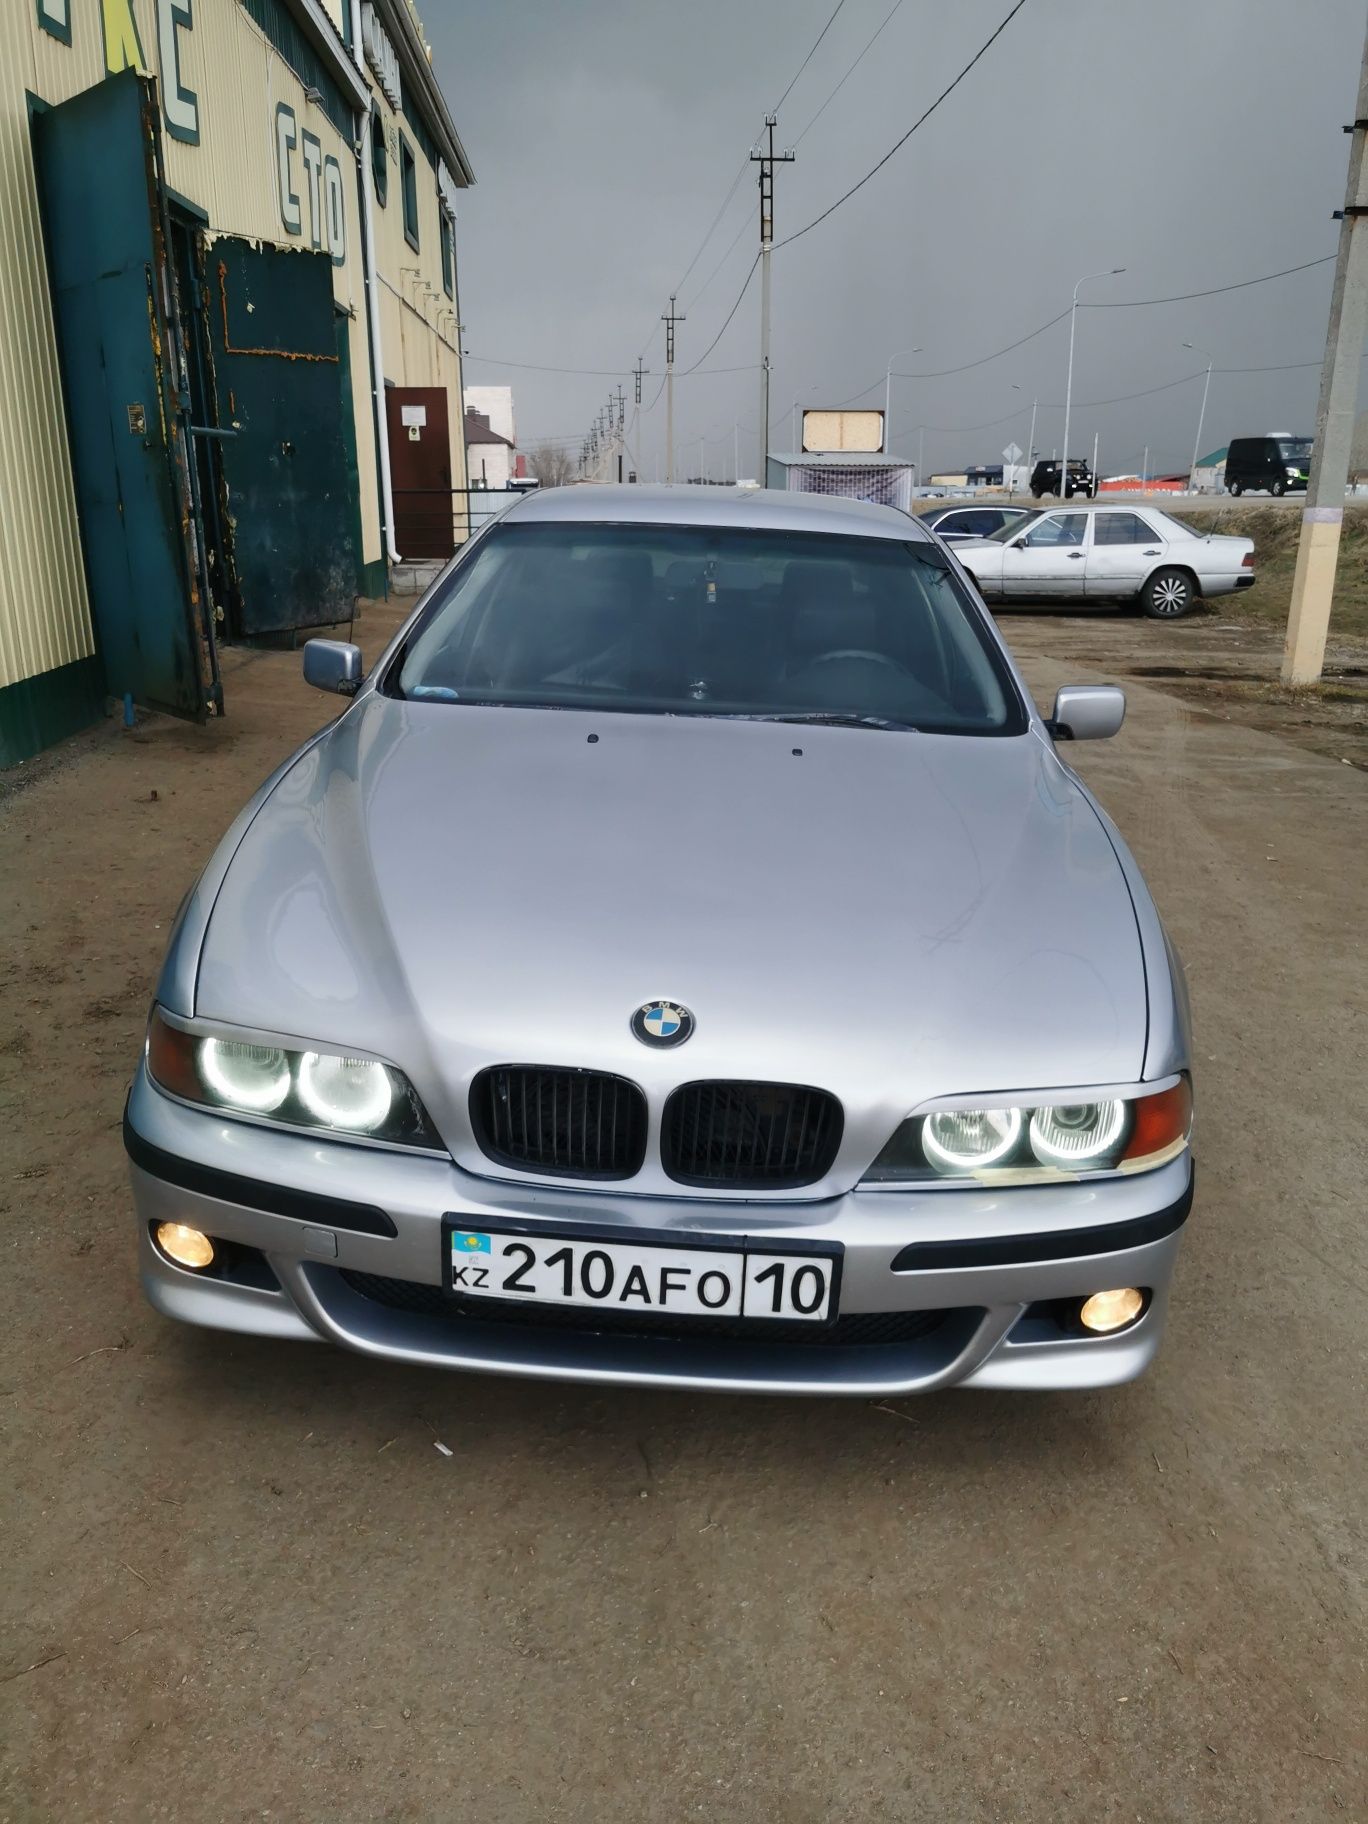 Продам автомобиль марки BMW E39